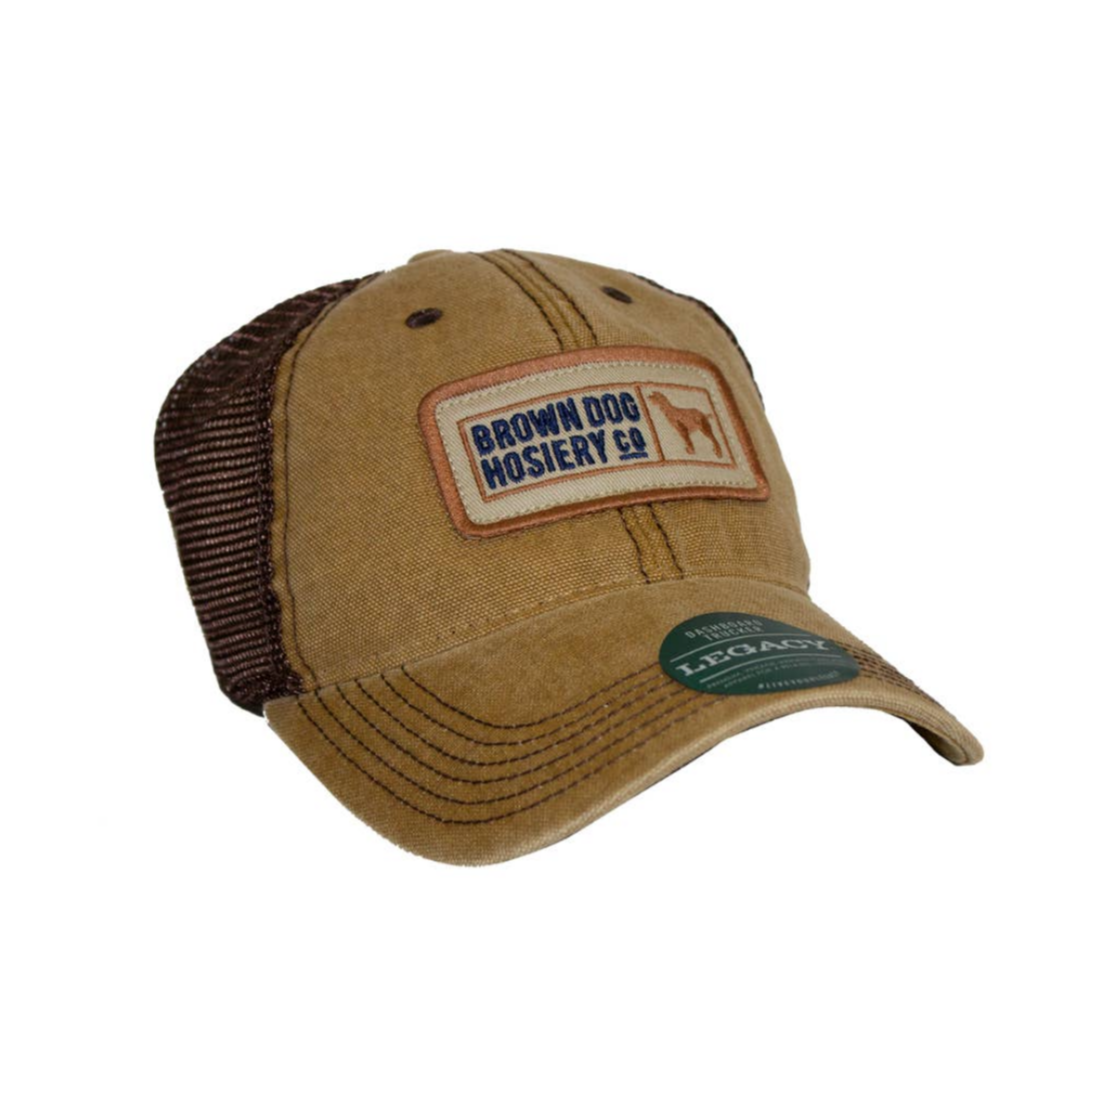 Brown Dog Hat